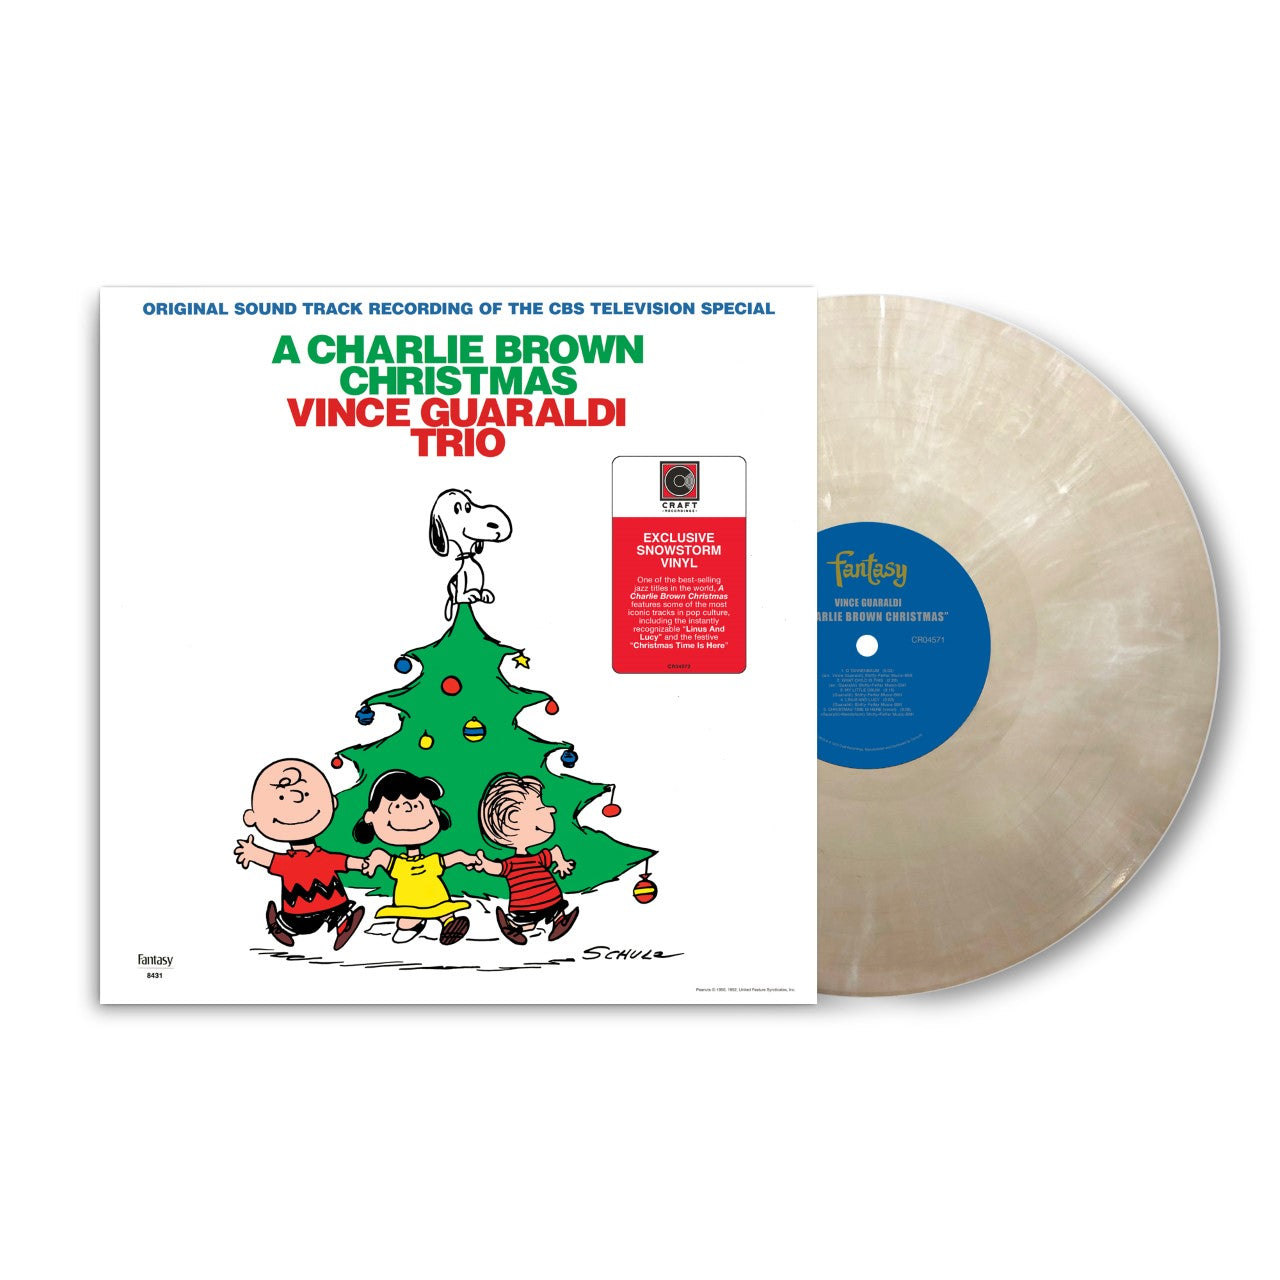 BRIGHT EYES A CHRISTMAS ALBUM [Clear Red Vinyl] LP – Vinylgram